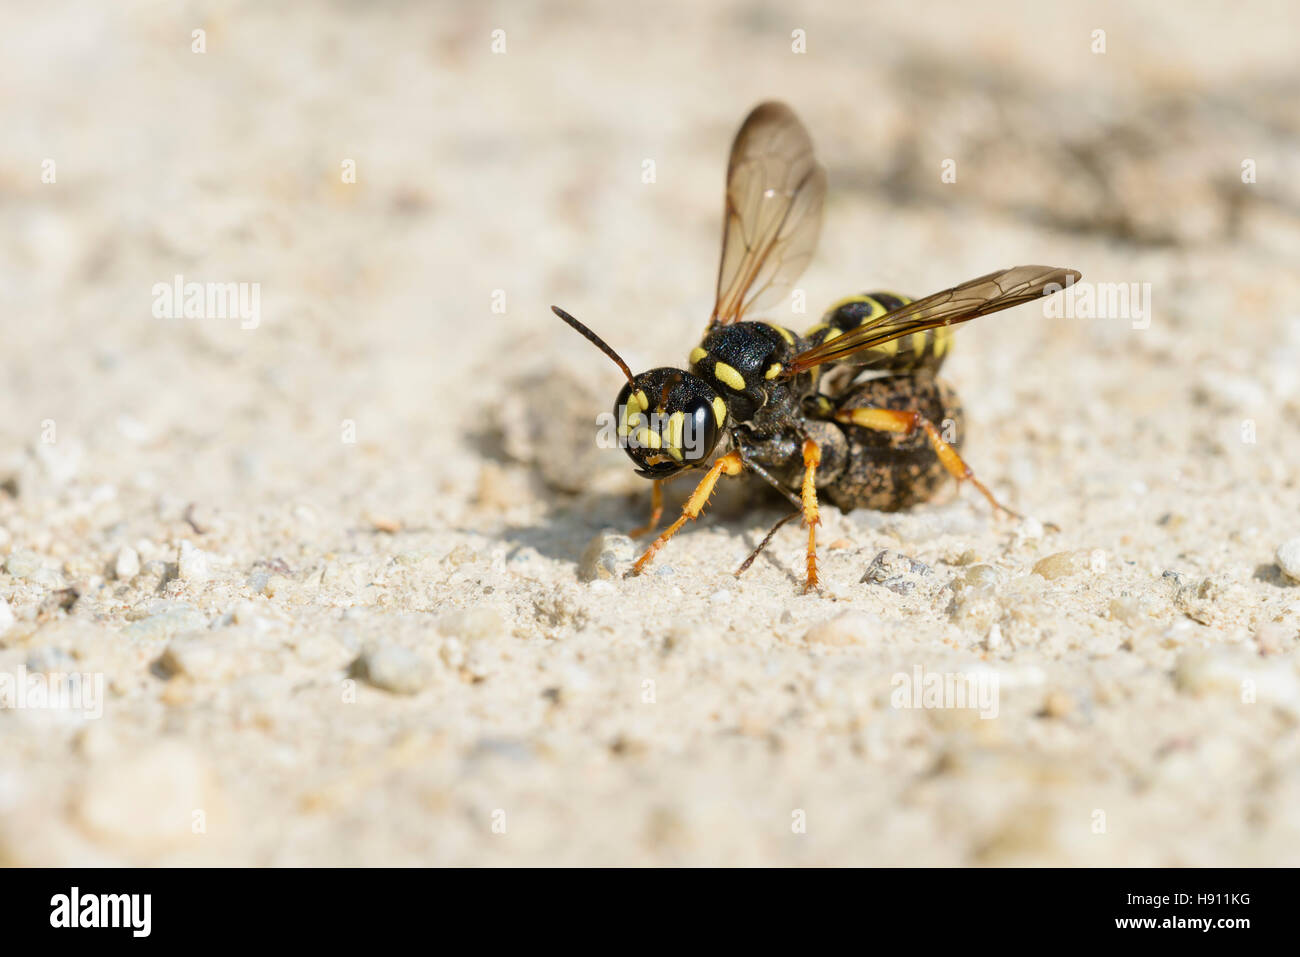 Sandknotenwespe mit Beute,Cerceris arenaria, Weevil Wasp with prey Stock Photo